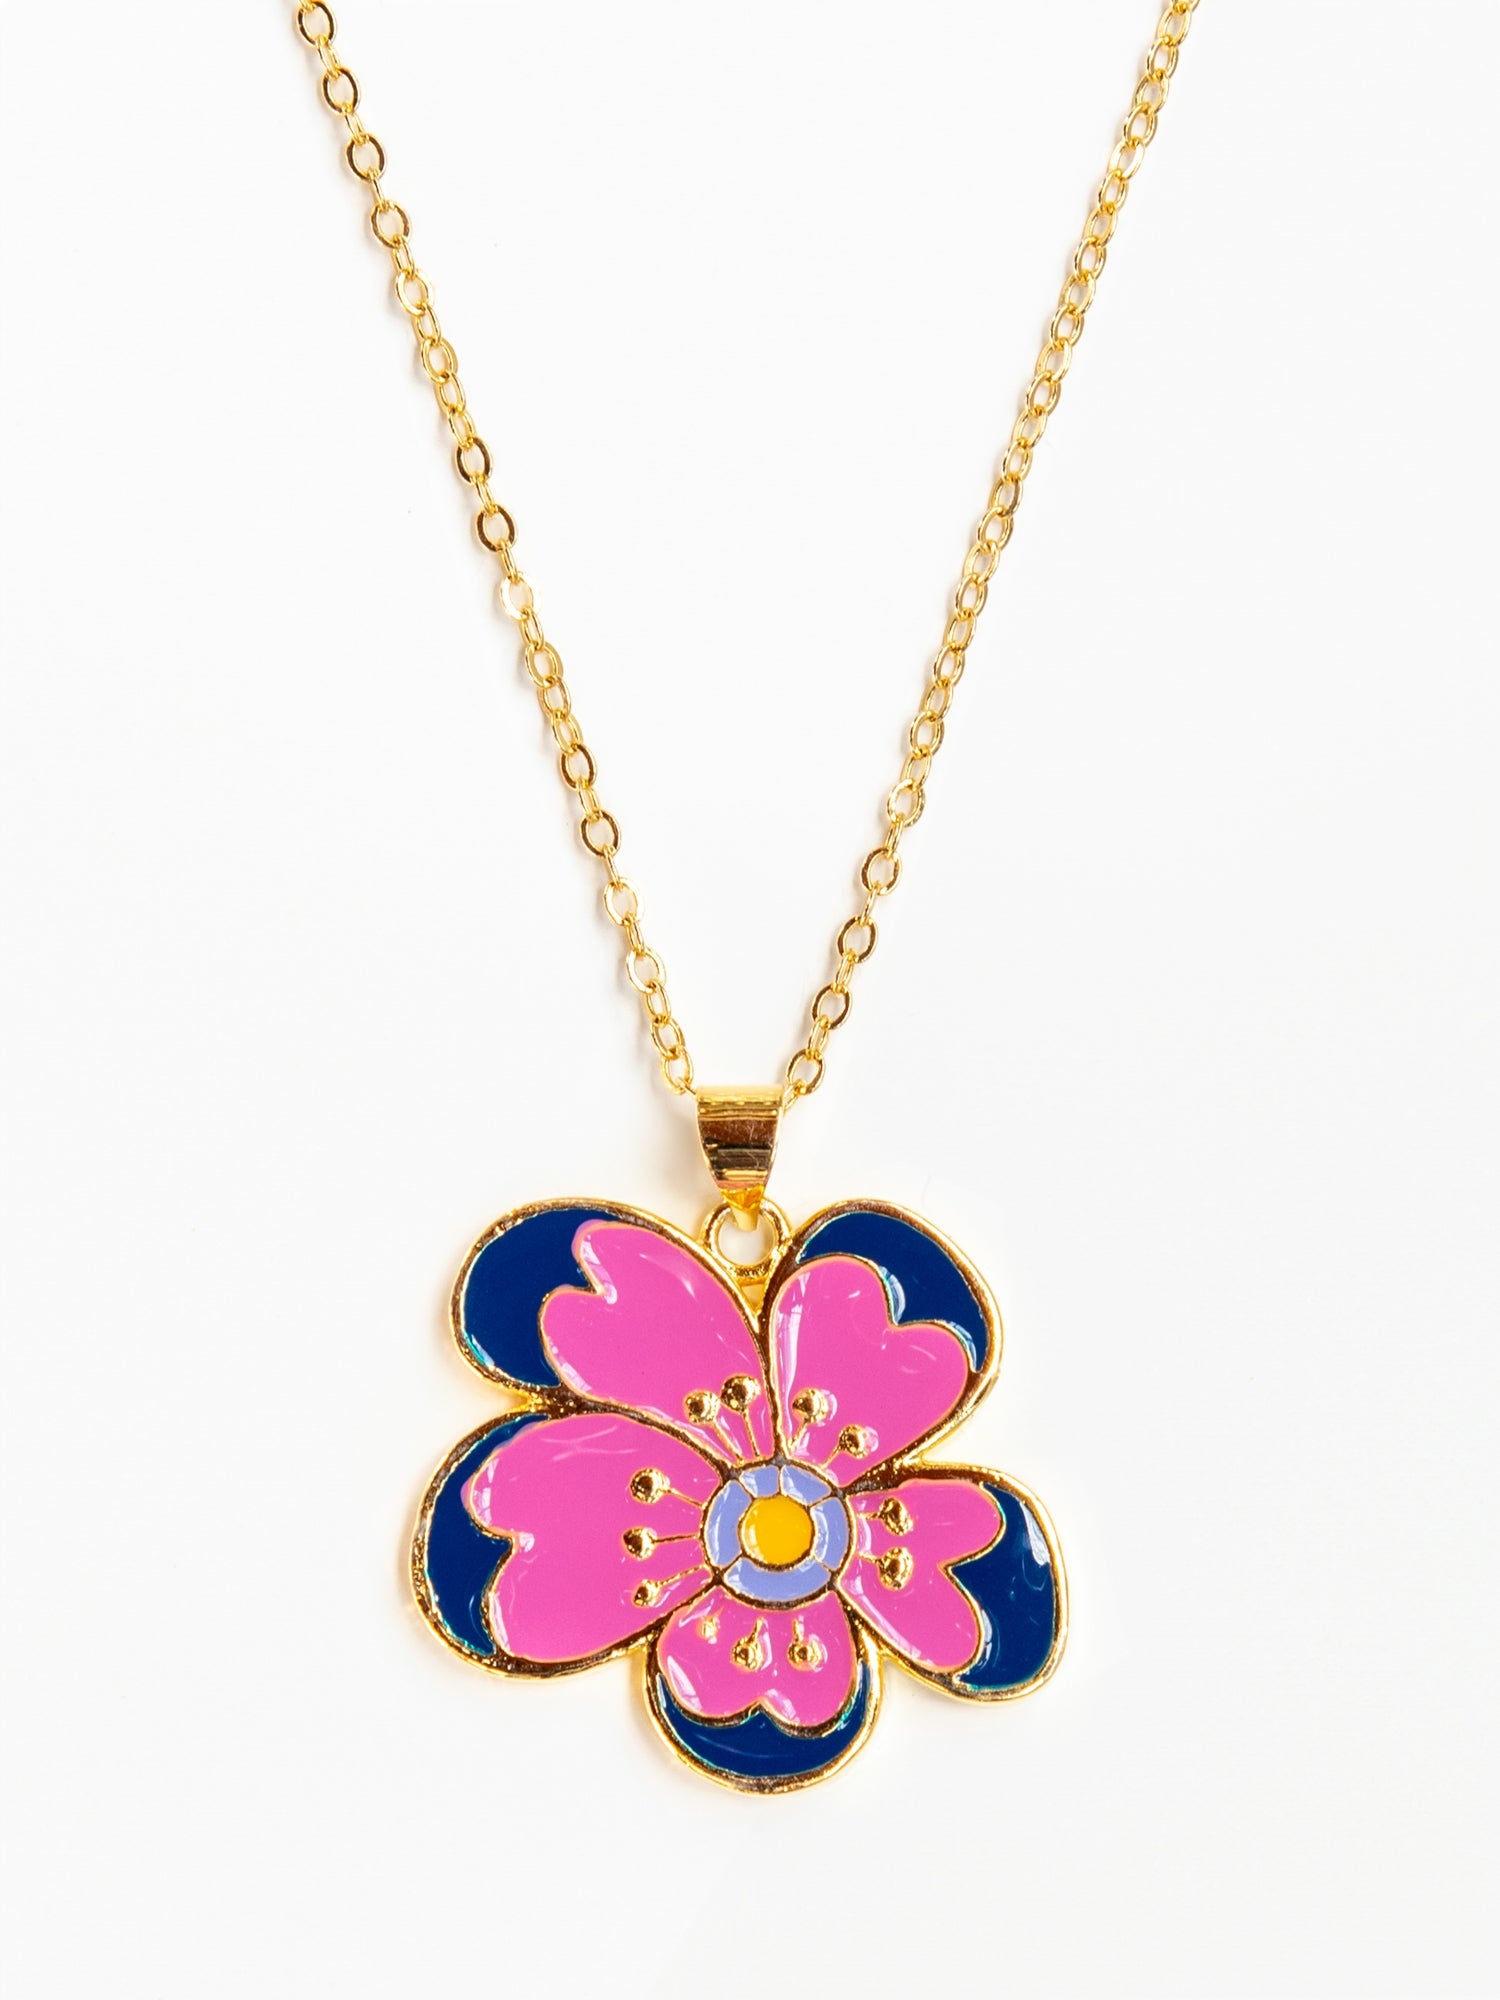 Violet necklace - Lesley Evers-Accessories-accessory-Shop